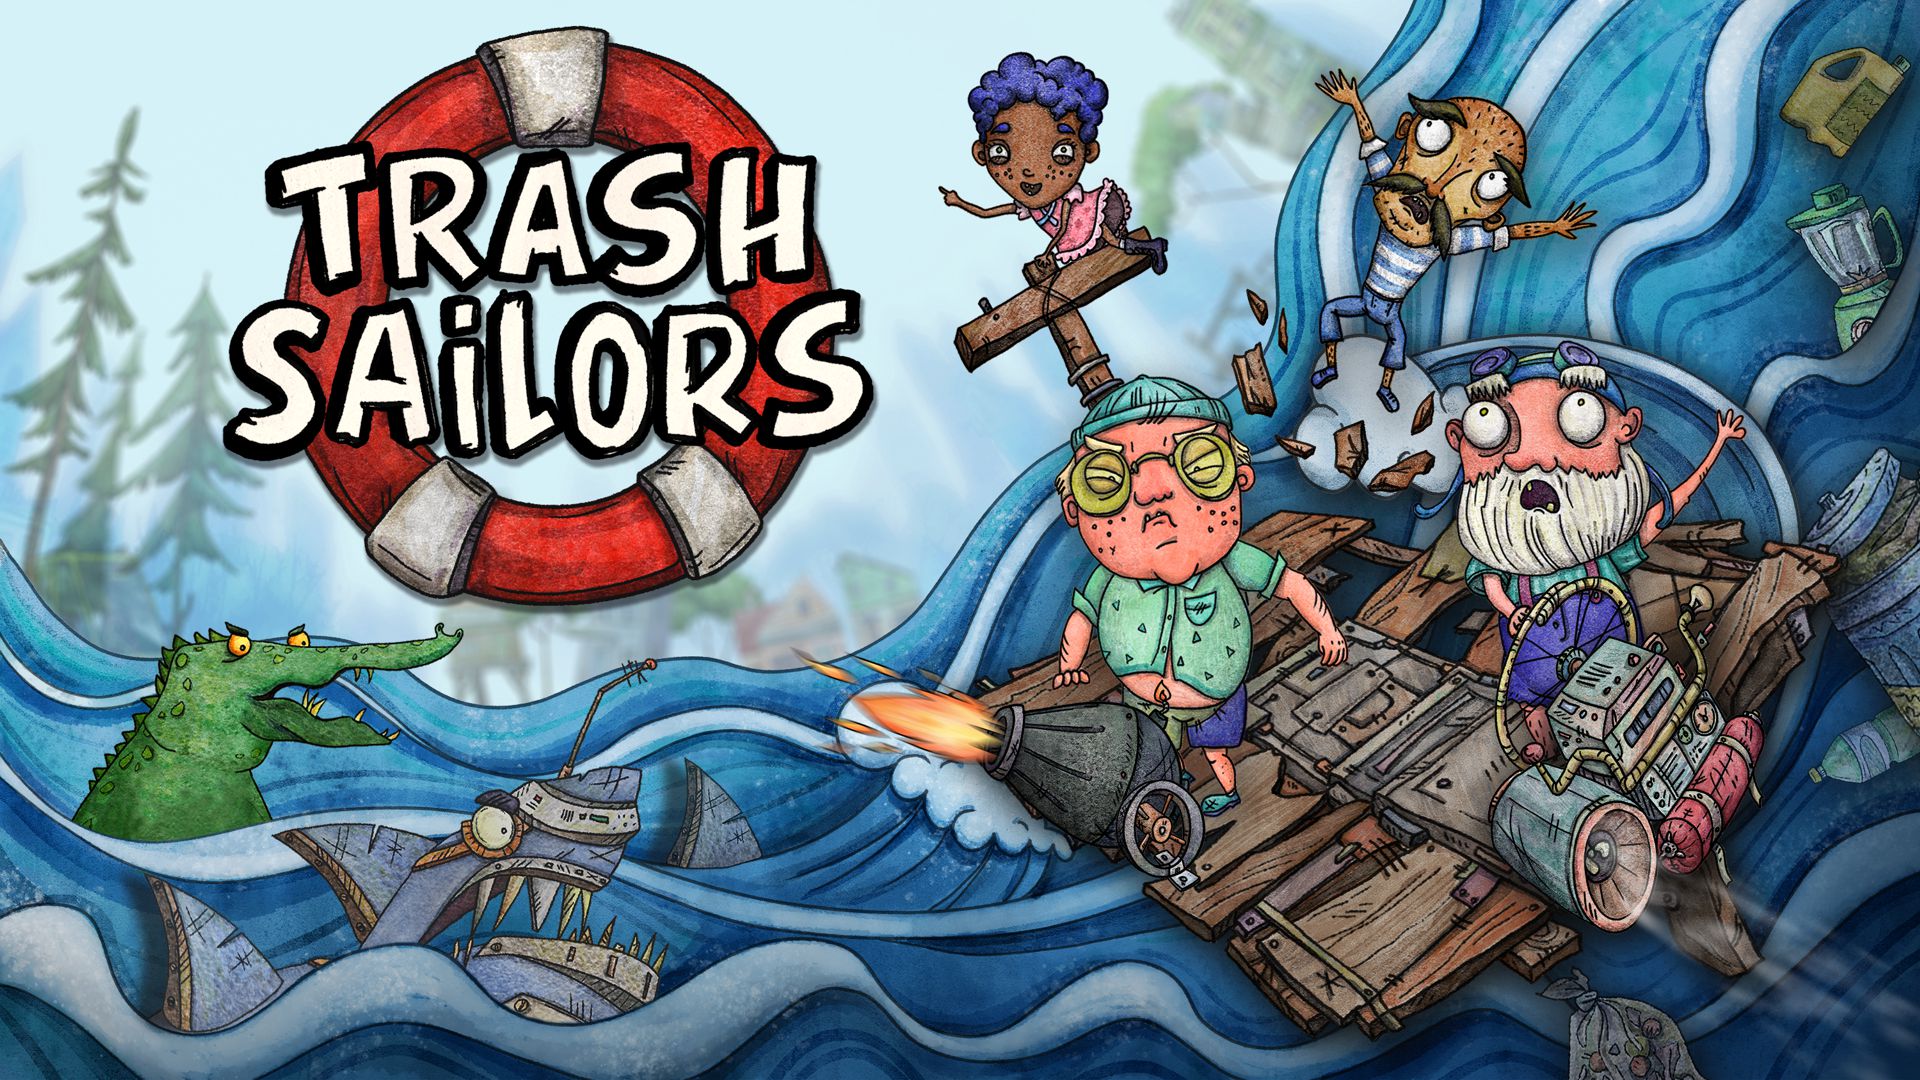 Trash Sailors Principal